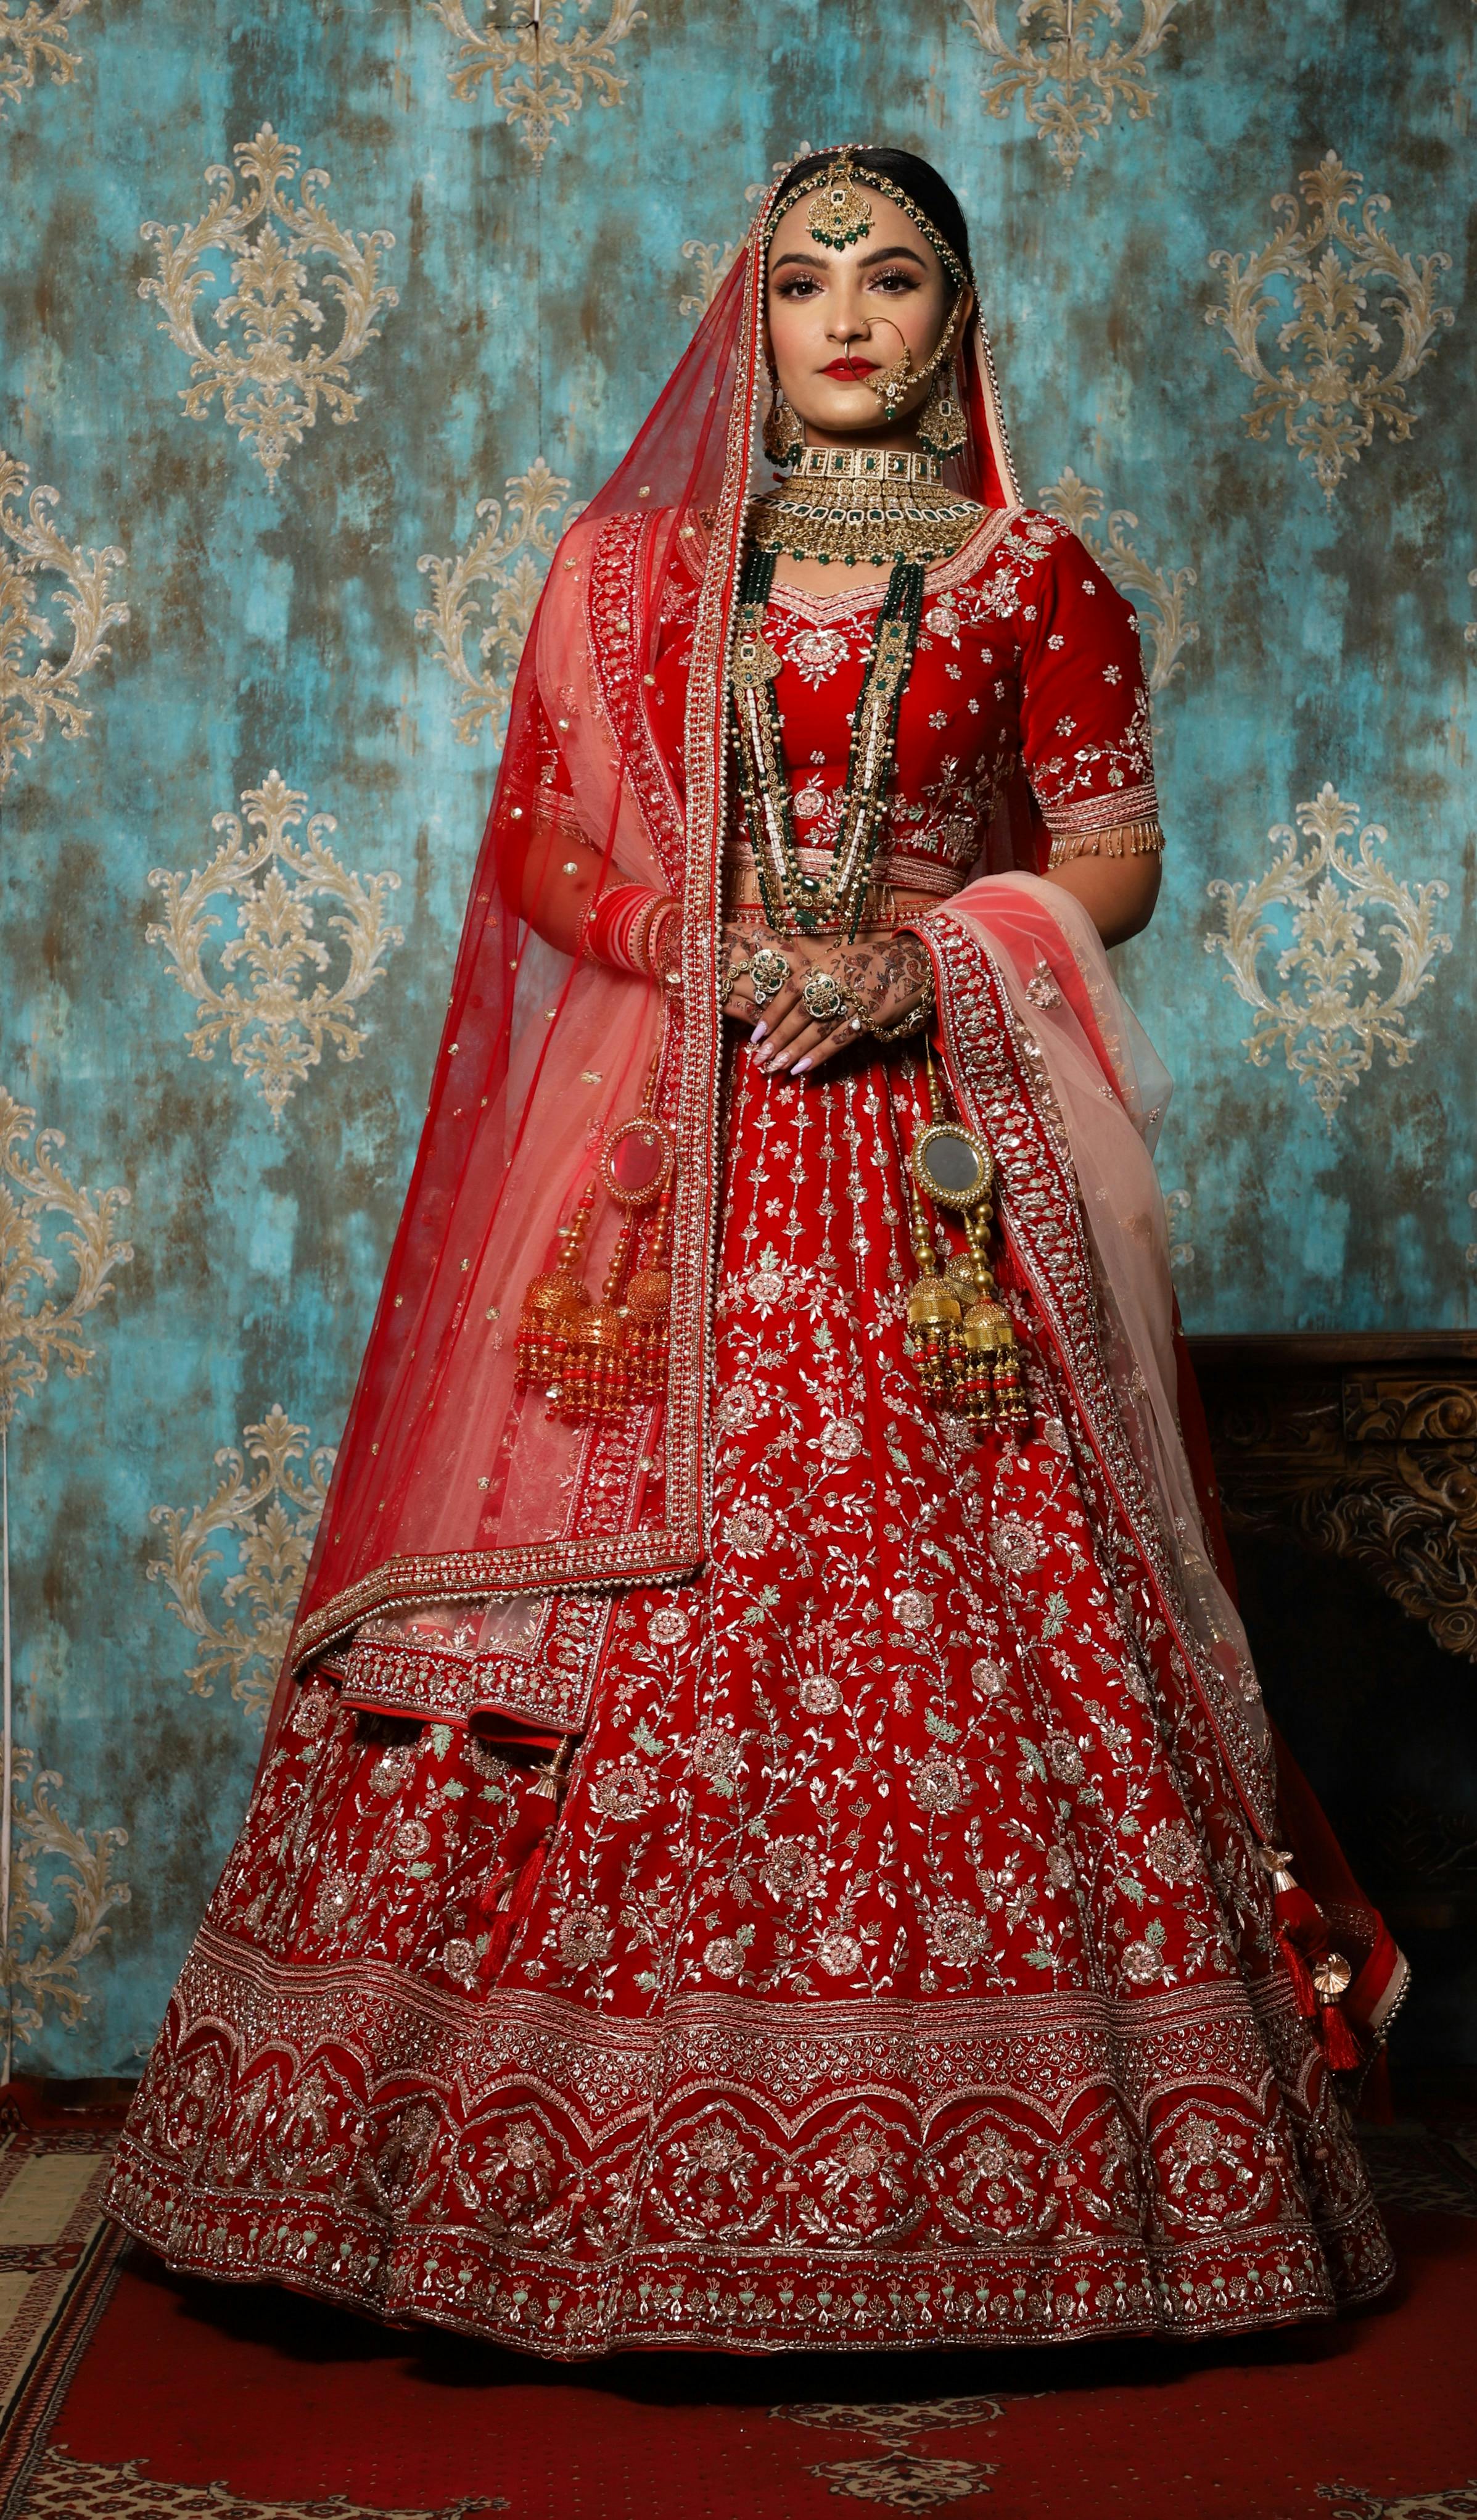 North Indian Wedding Dress: Bridal Lehengas to Groom’s Styles